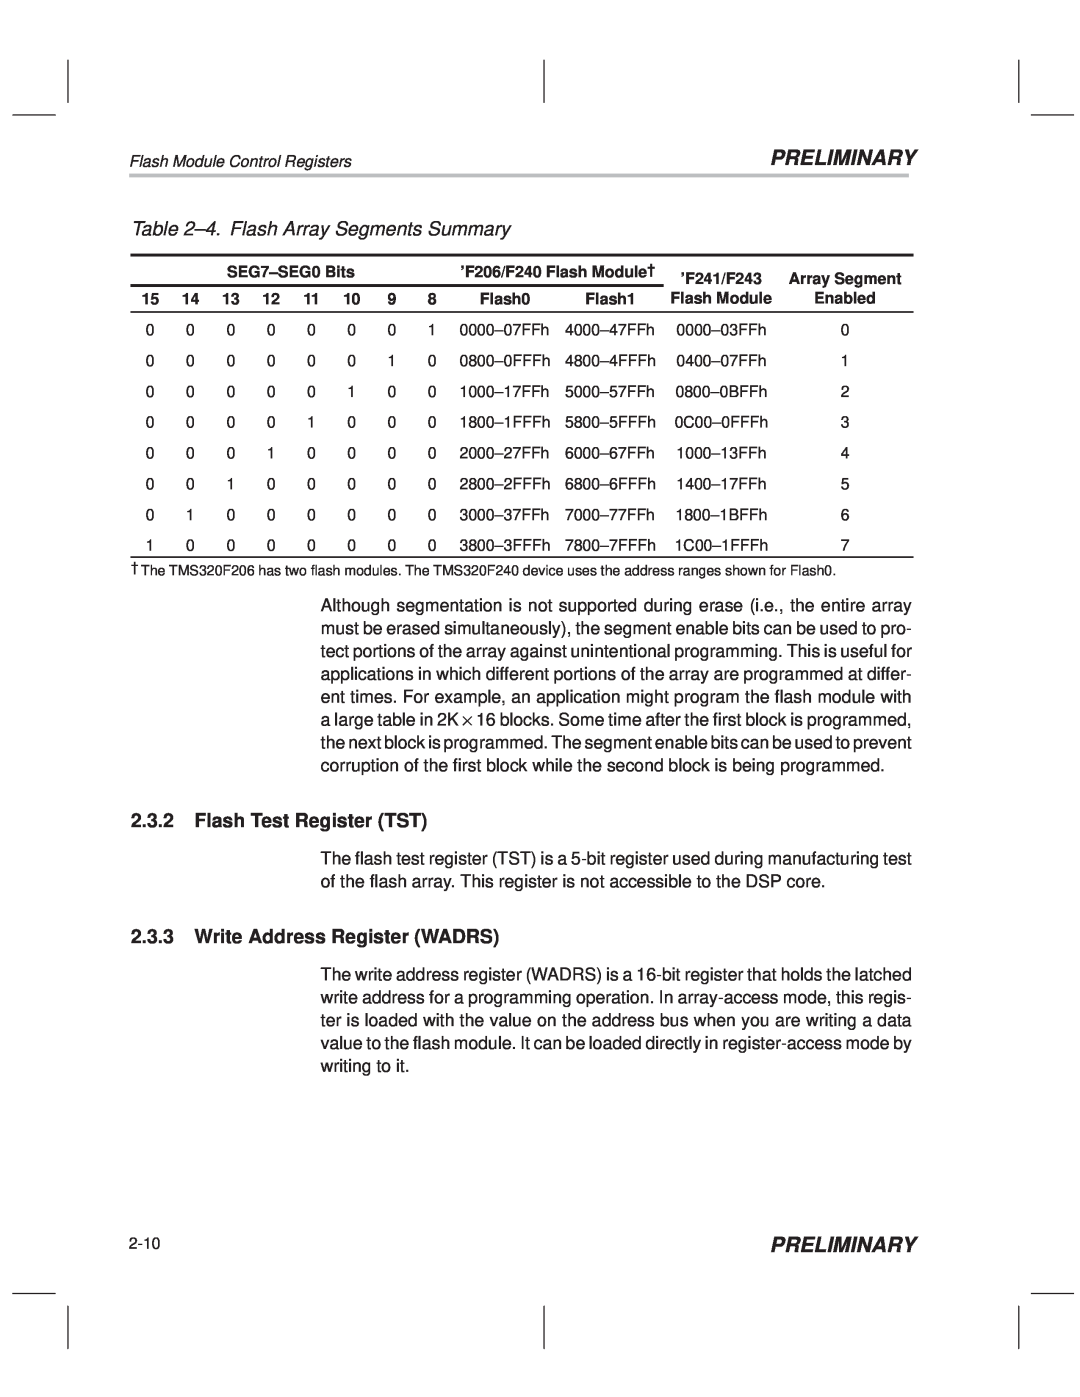 Texas Instruments TMS320F20x/F24x DSP manual ±4. Flash Array Segments Summary, Flash Test Register TST, Preliminary 